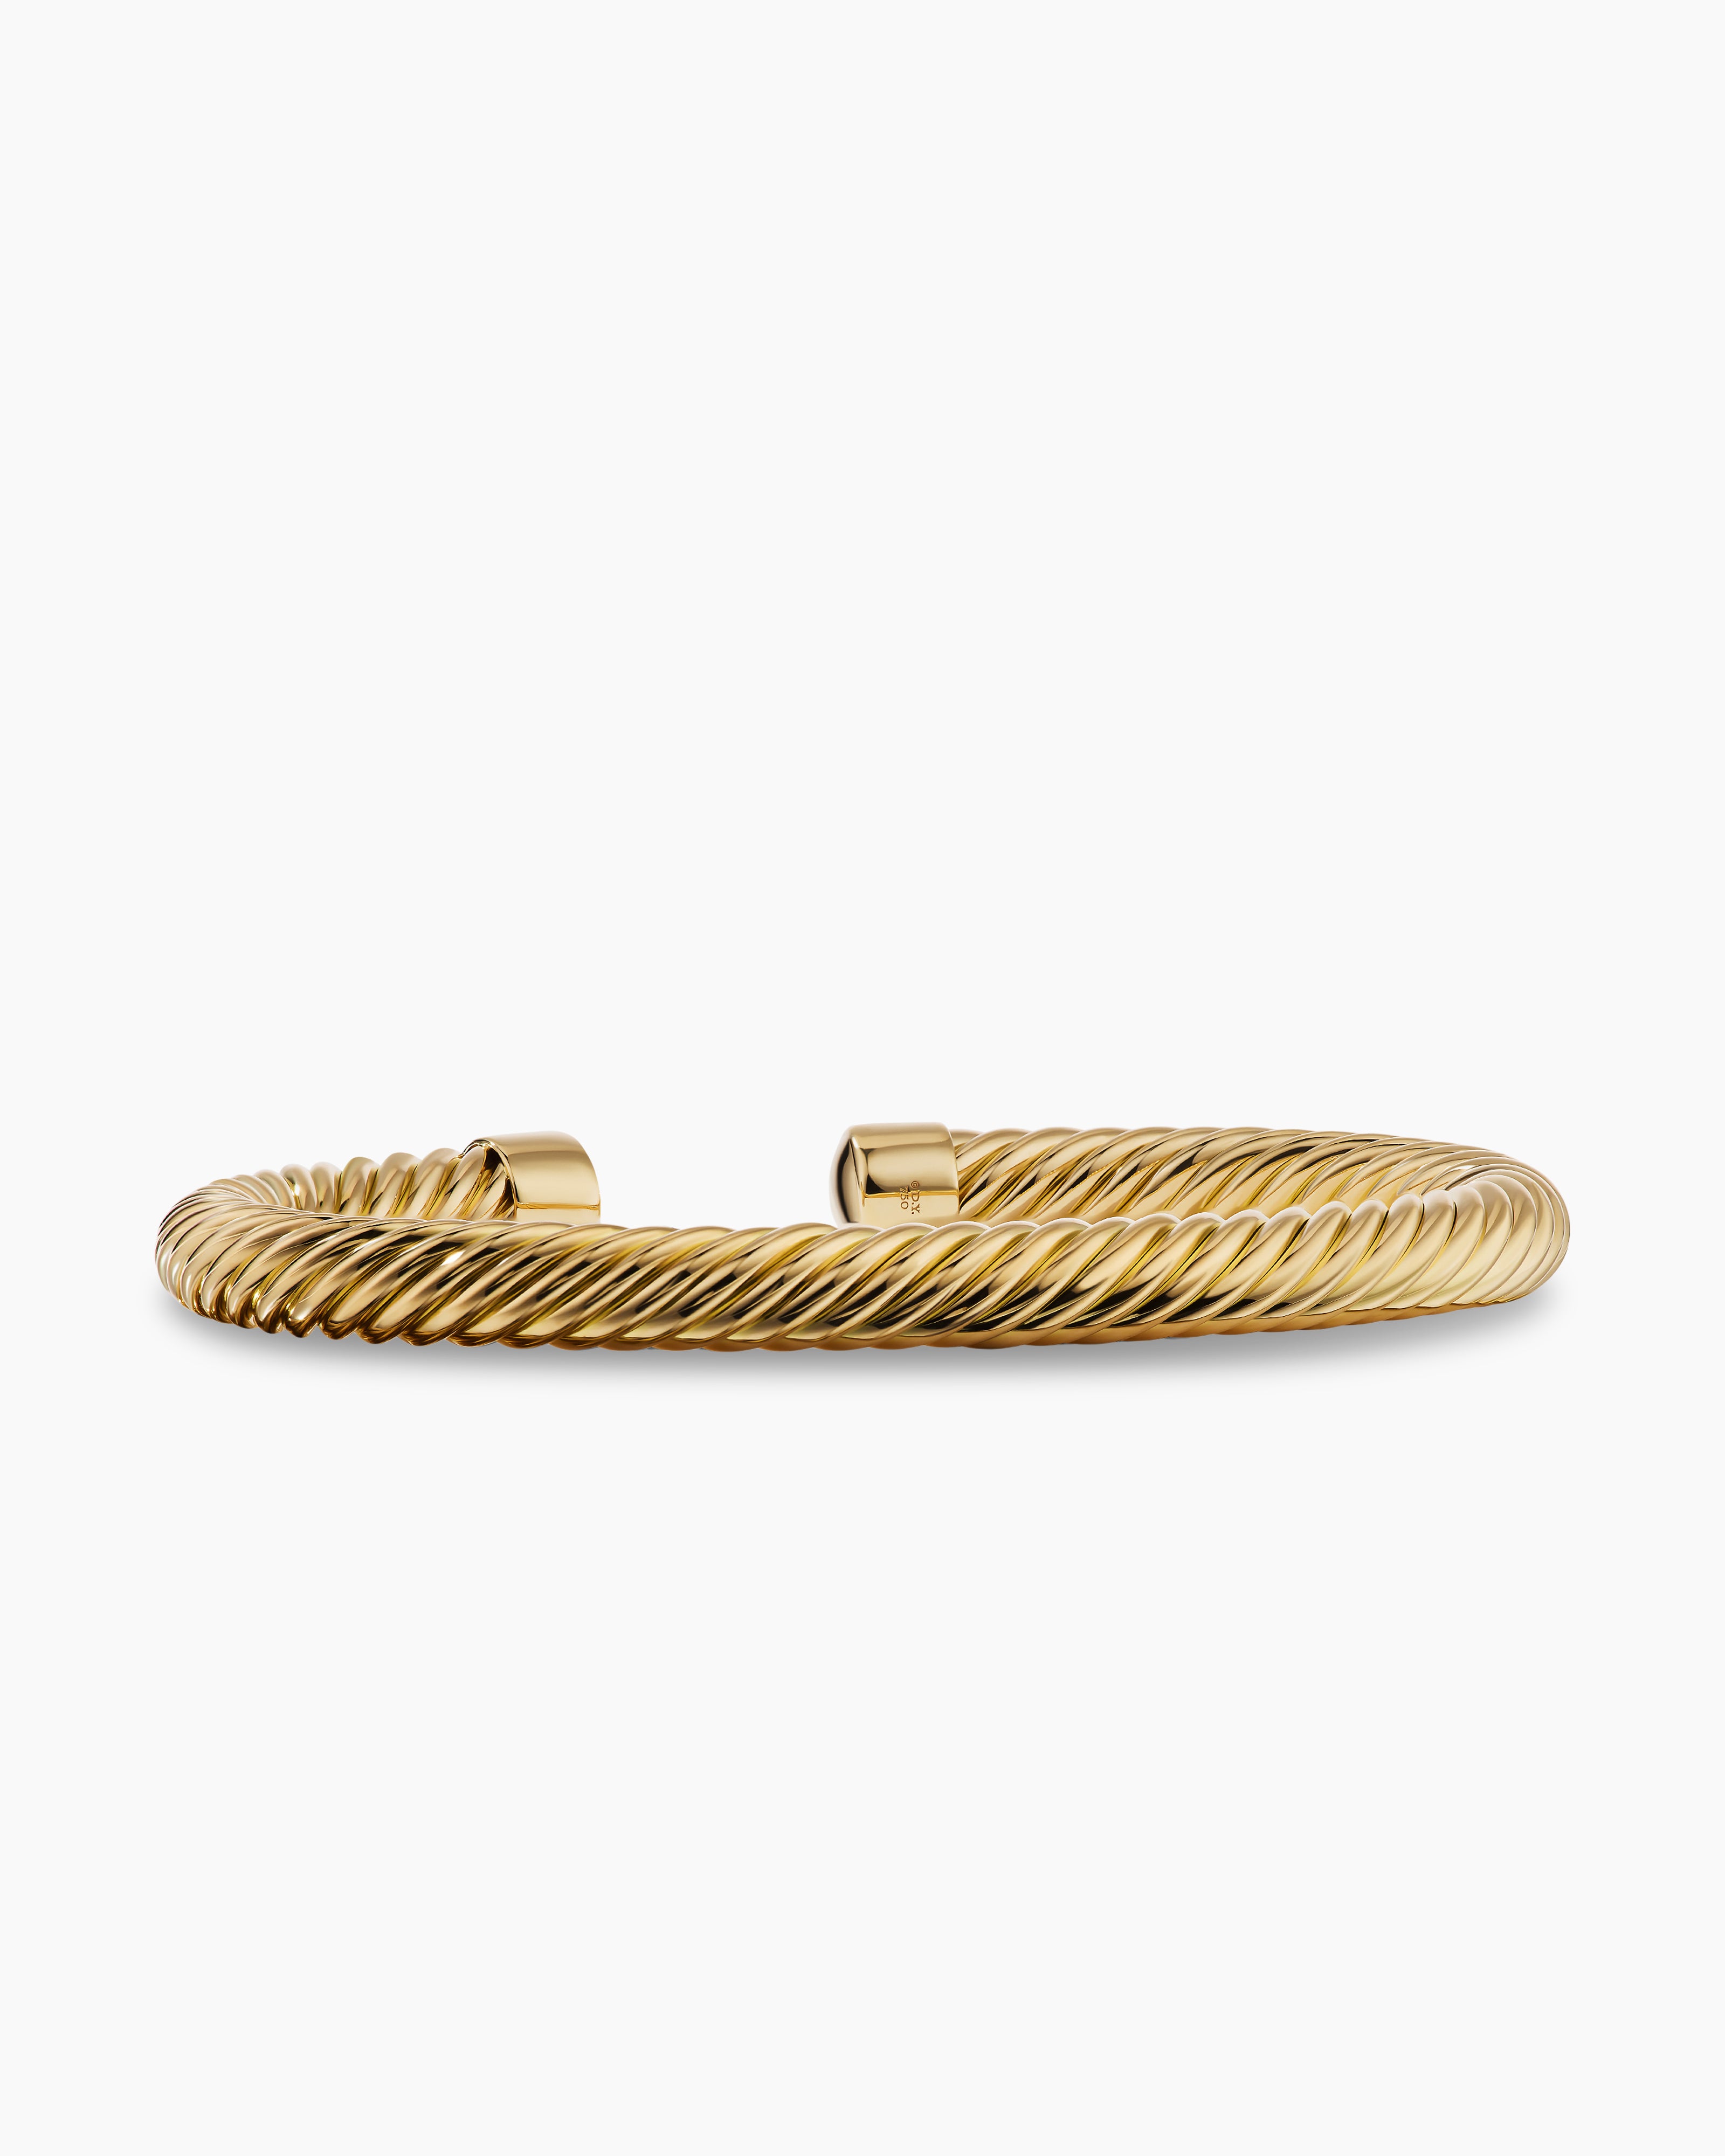 DAVID YURMAN Men'S Cable Cuff Bracelet In 18K Gold, 7Mm